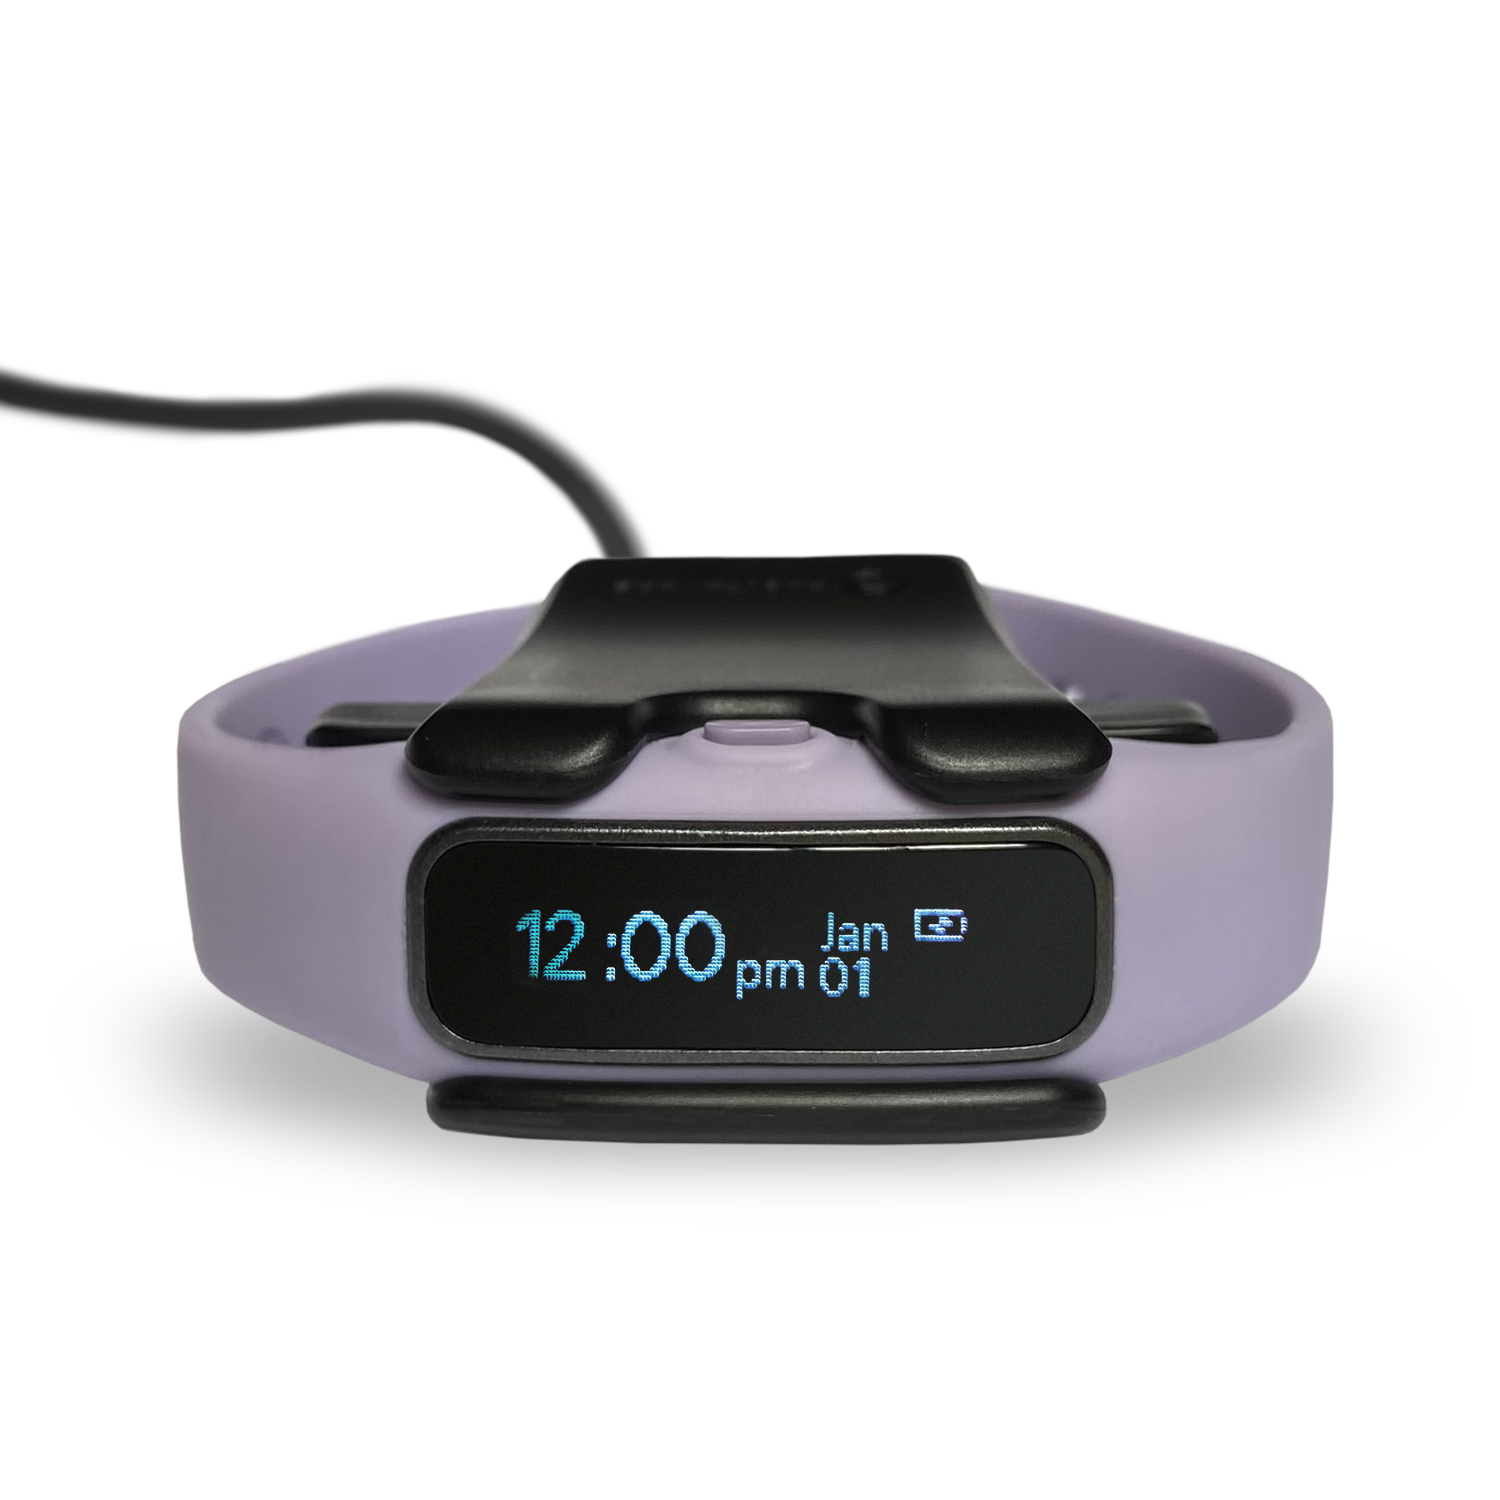 A purple smart watch with a clock on it.